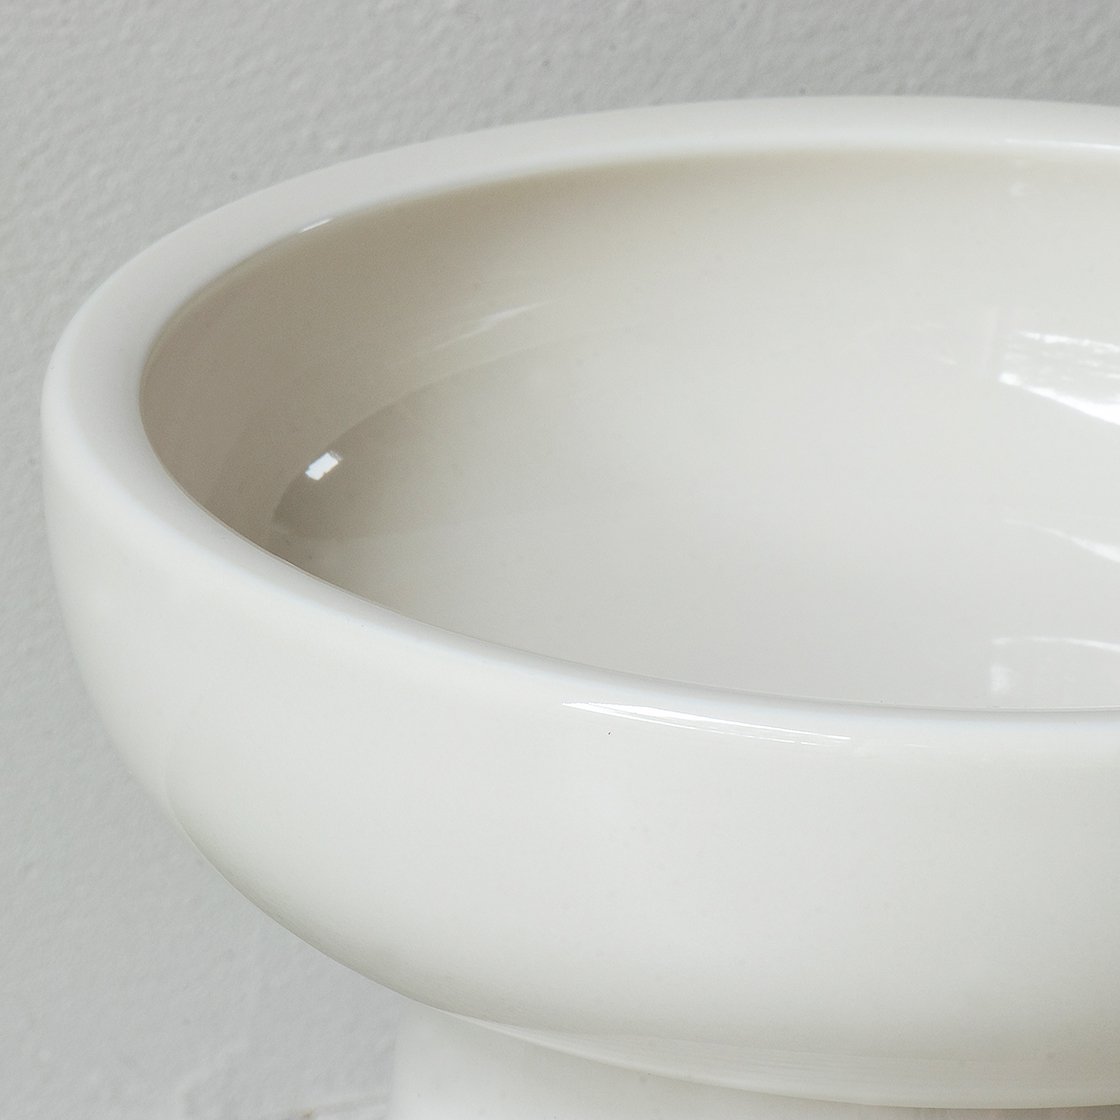 Classy Bowl【5インチ】オフホワイト Made in Japan